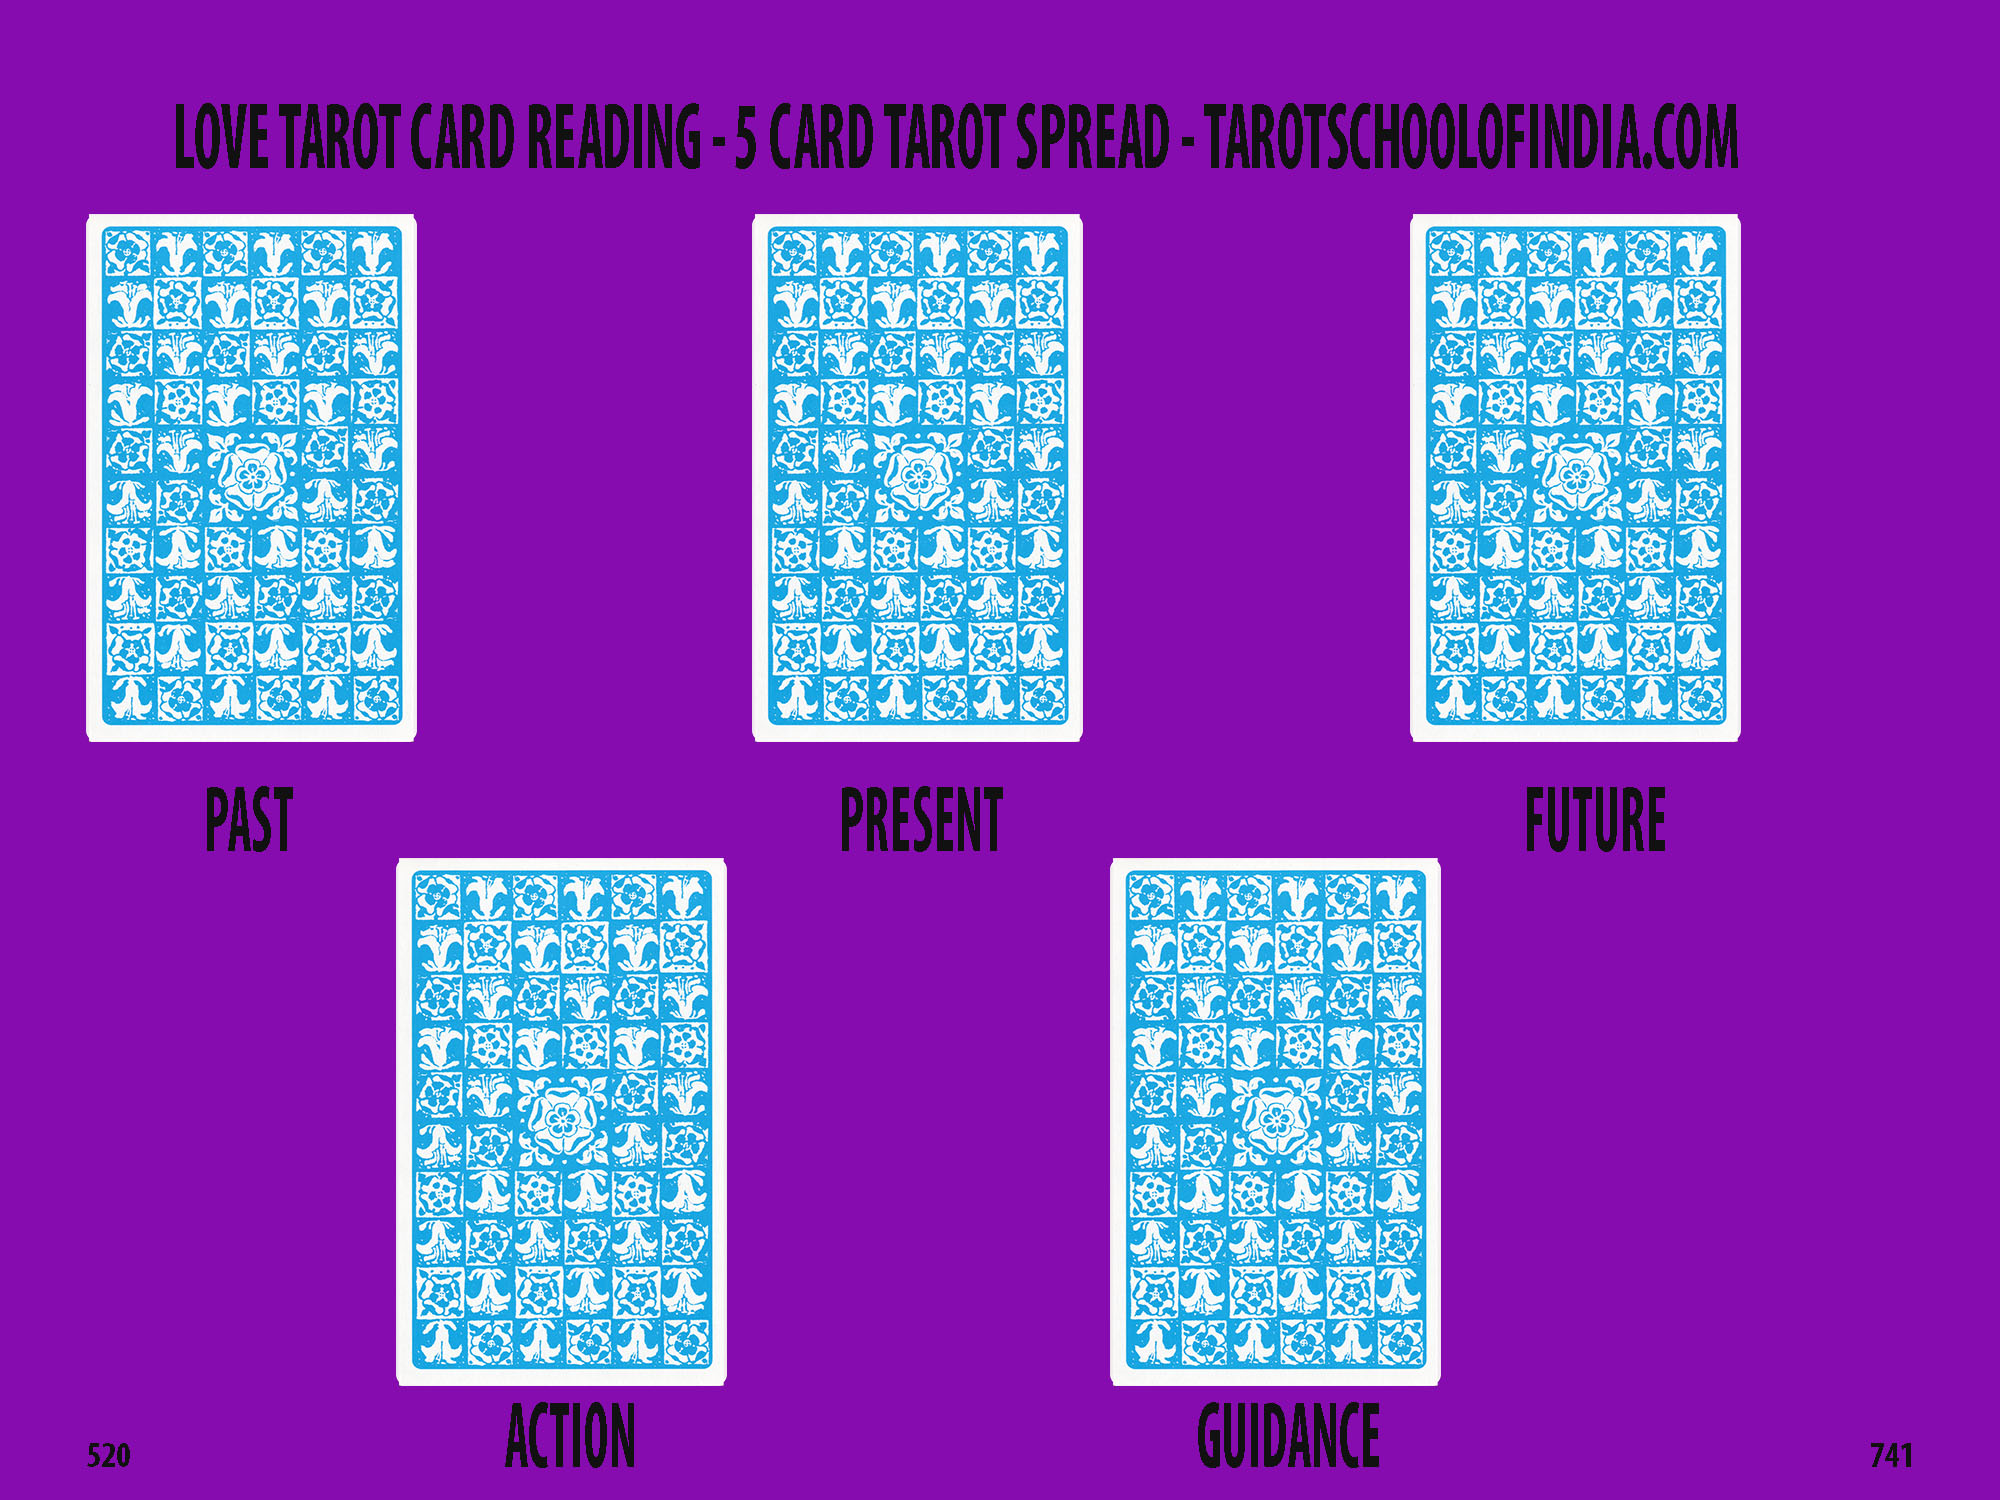 LOVE TAROT CARD READING - 5 CARD TAROT SPREAD